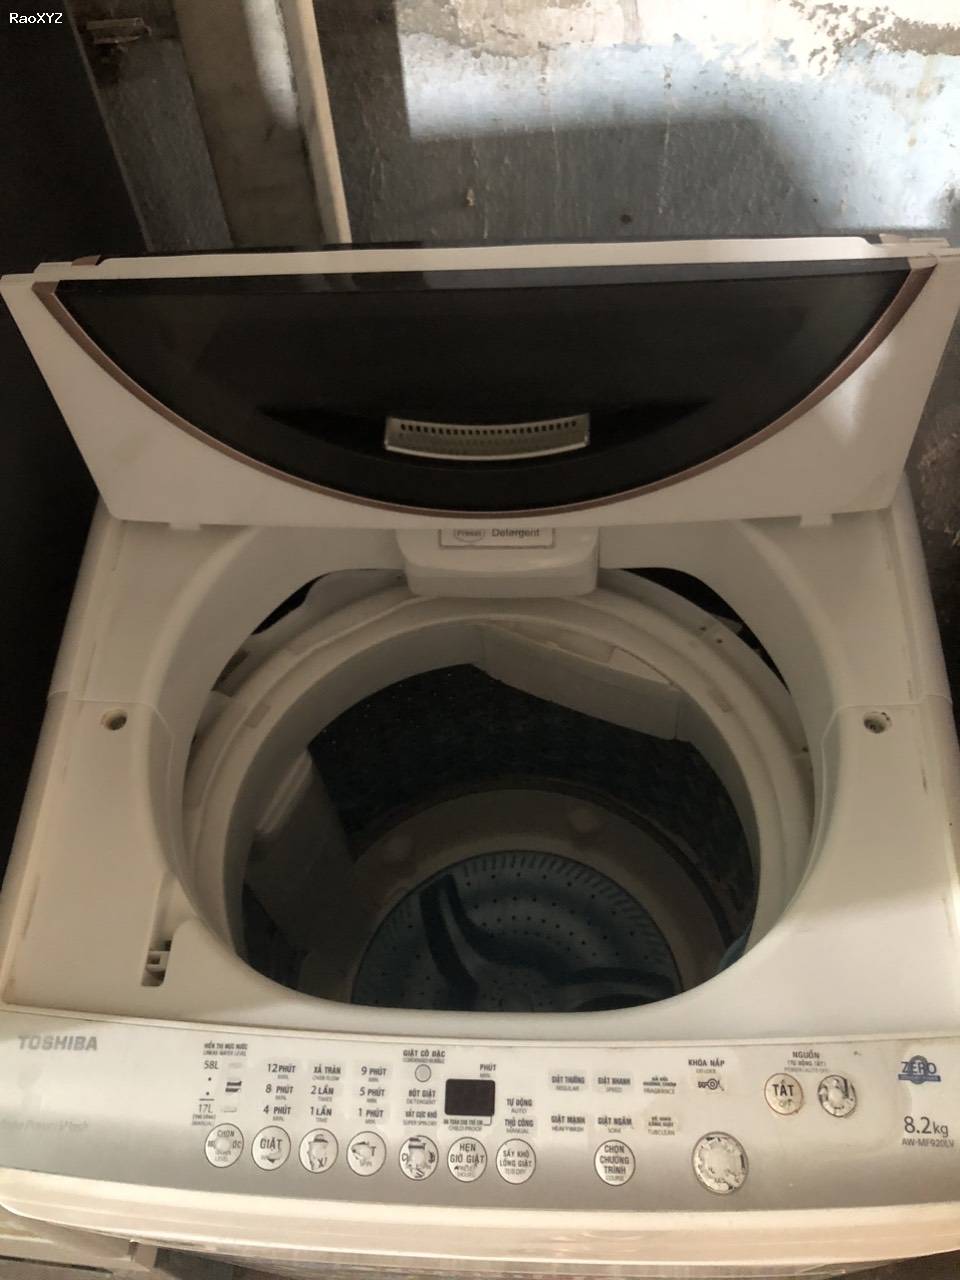 Máy giặt Toshiba 8.2kg giặt tốt